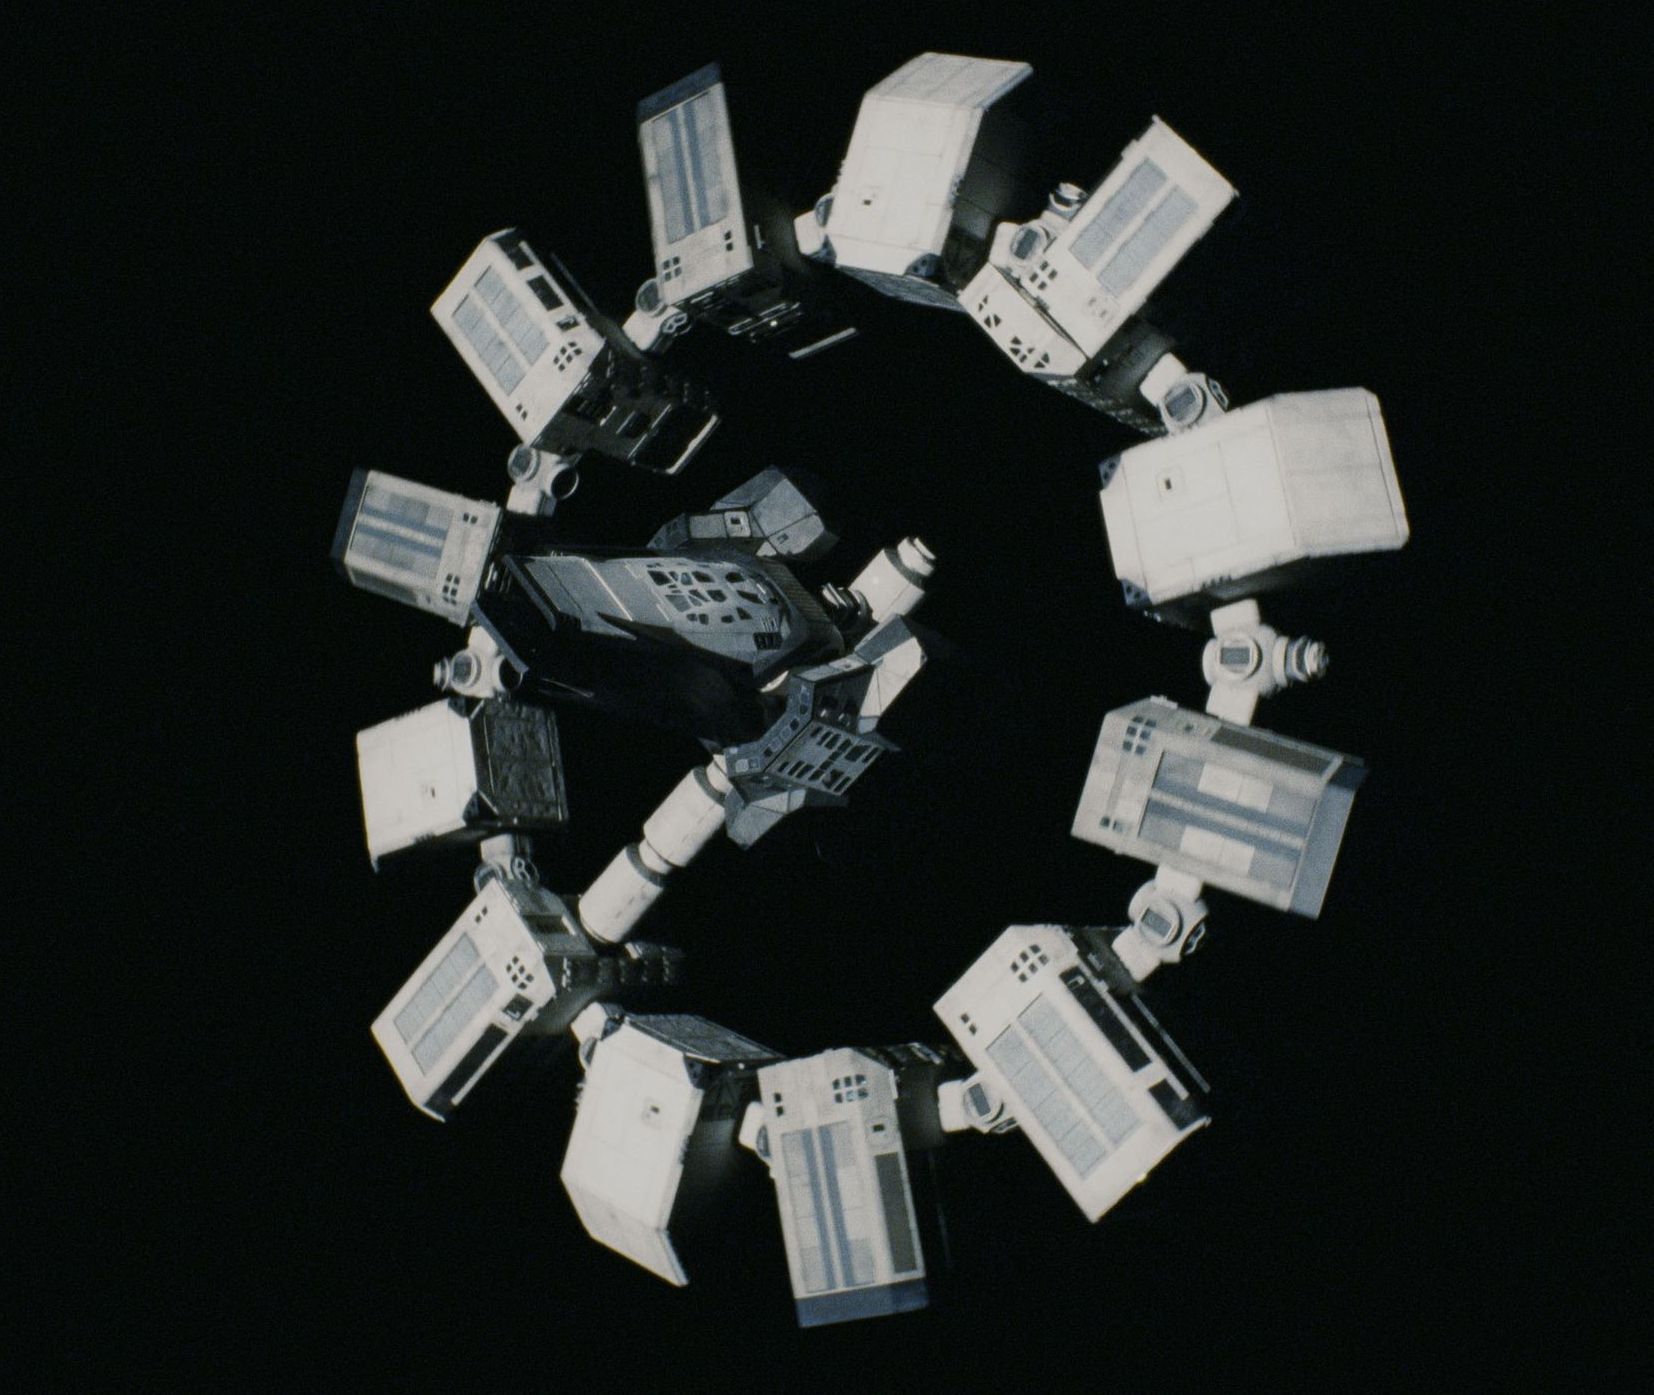 Interstellar Endurance space station